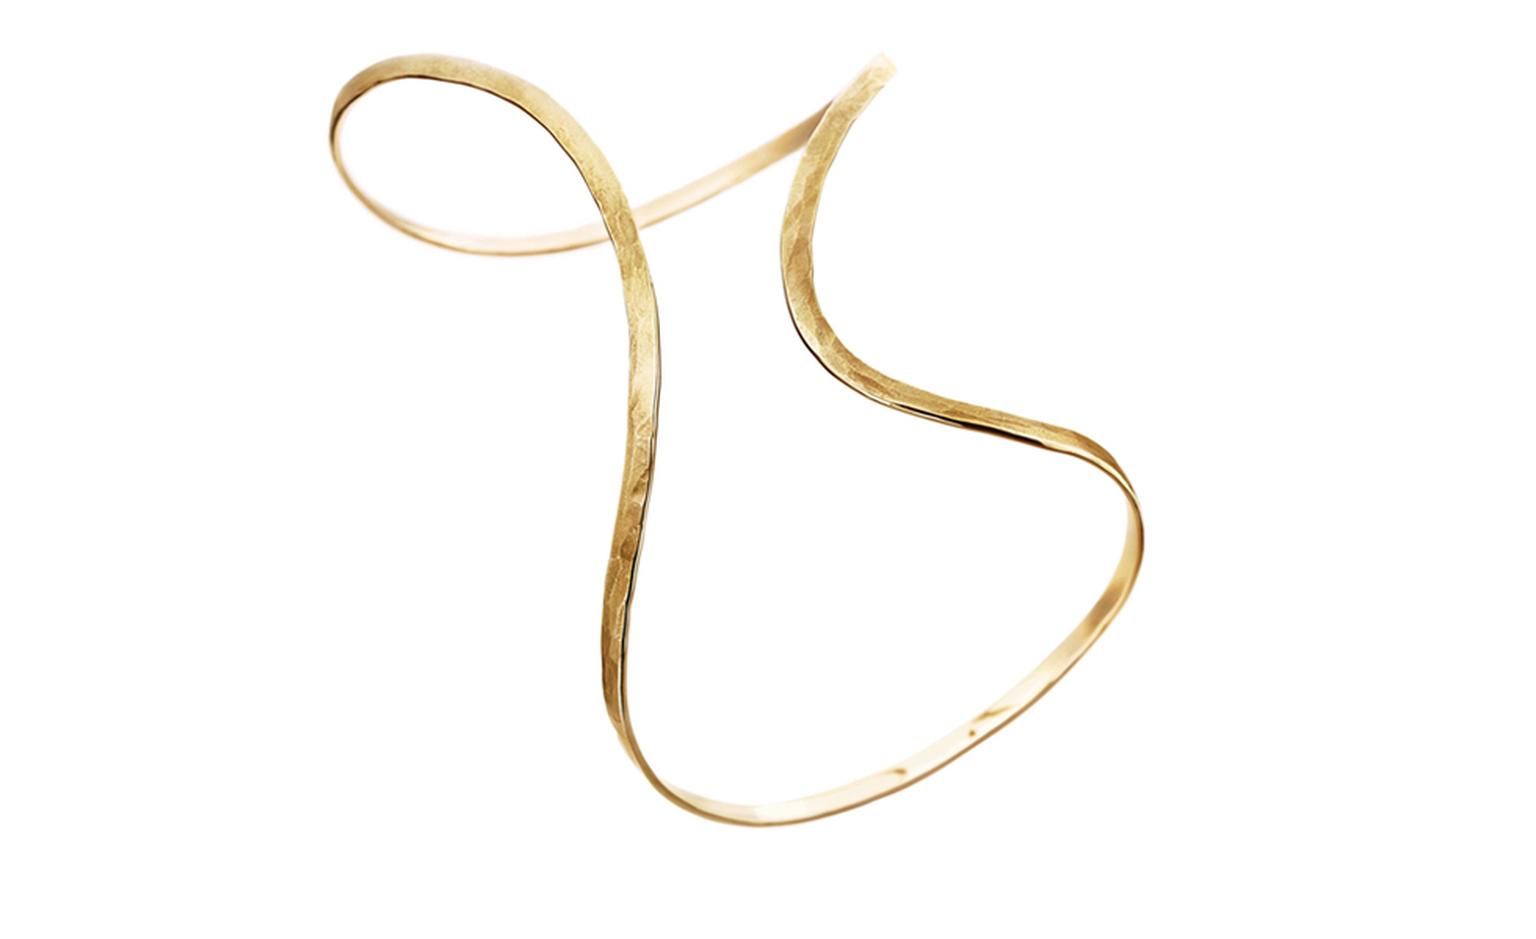 Fabulous H. Stern Aquamarine and Diamond Bracelet in 18 Karat White Gold